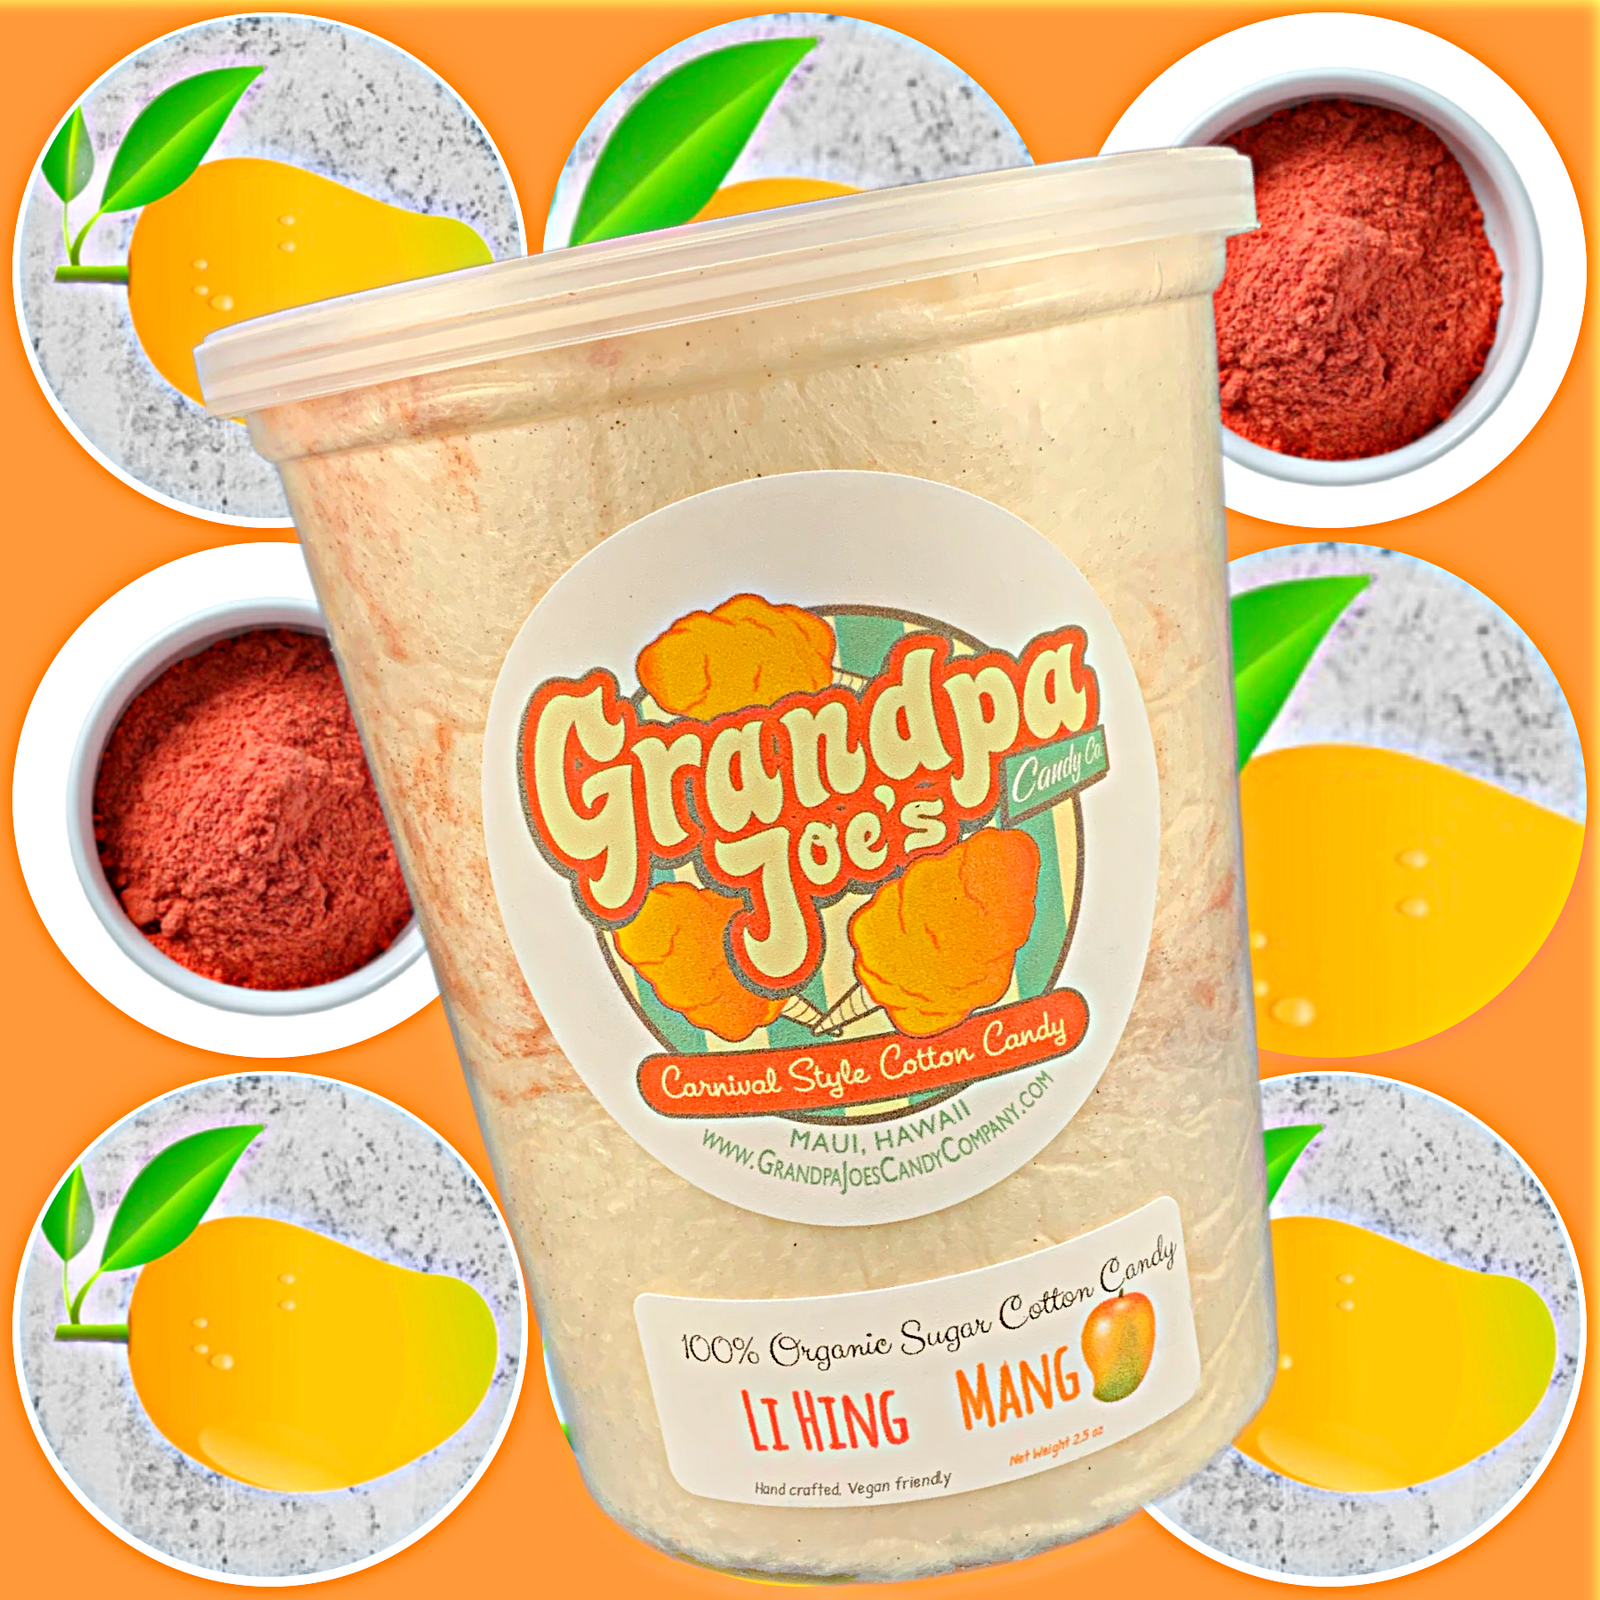 Pop-Up Mākeke - Grandpa Joe's Candy Company - Li Hing Mango 100% Organic Sugar Cotton Candy